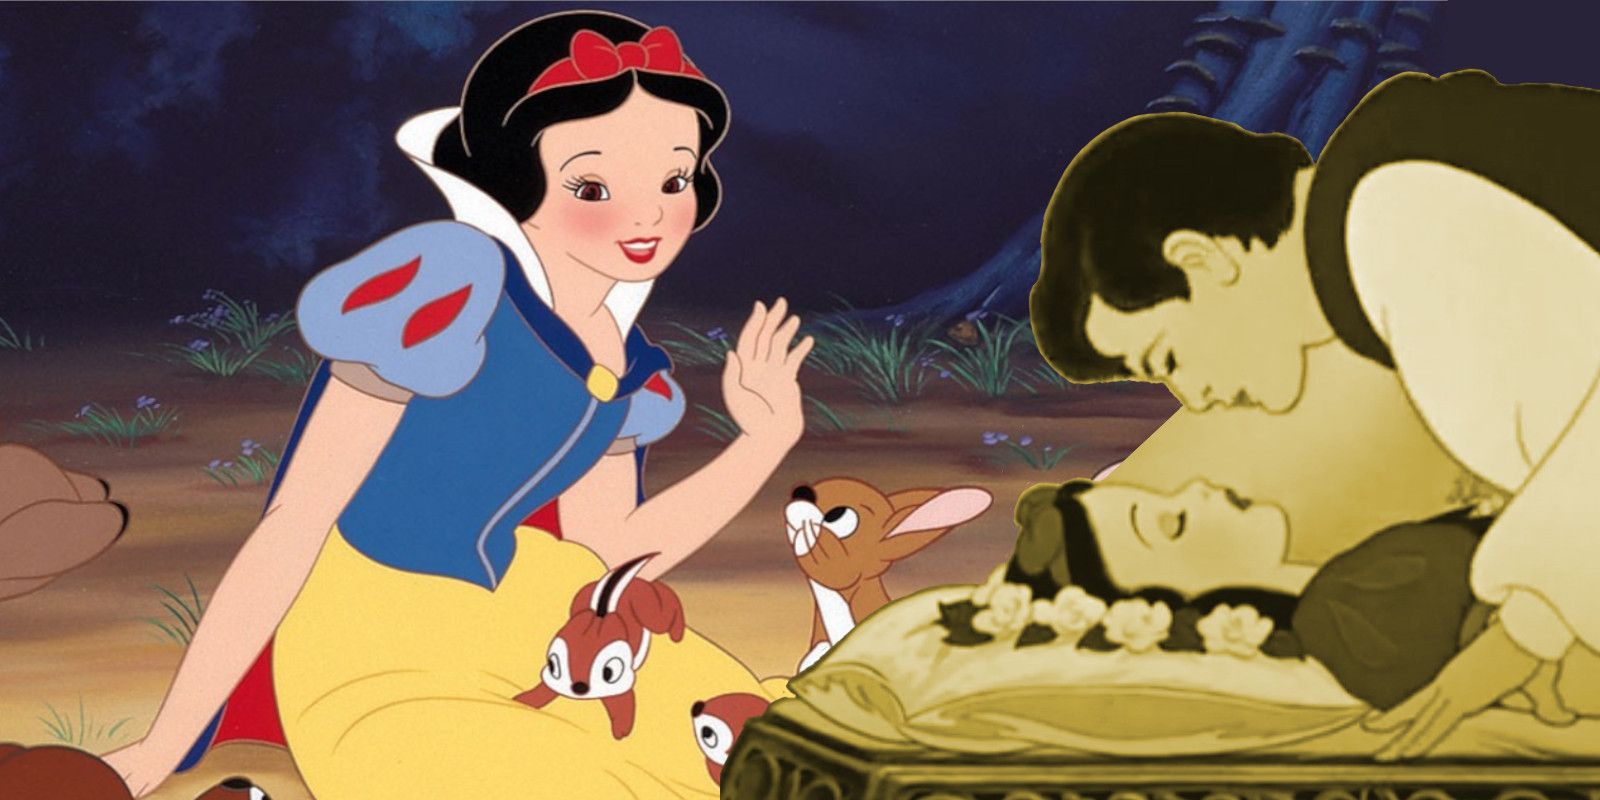 Disney's Snow White and the Seven Dwarfs